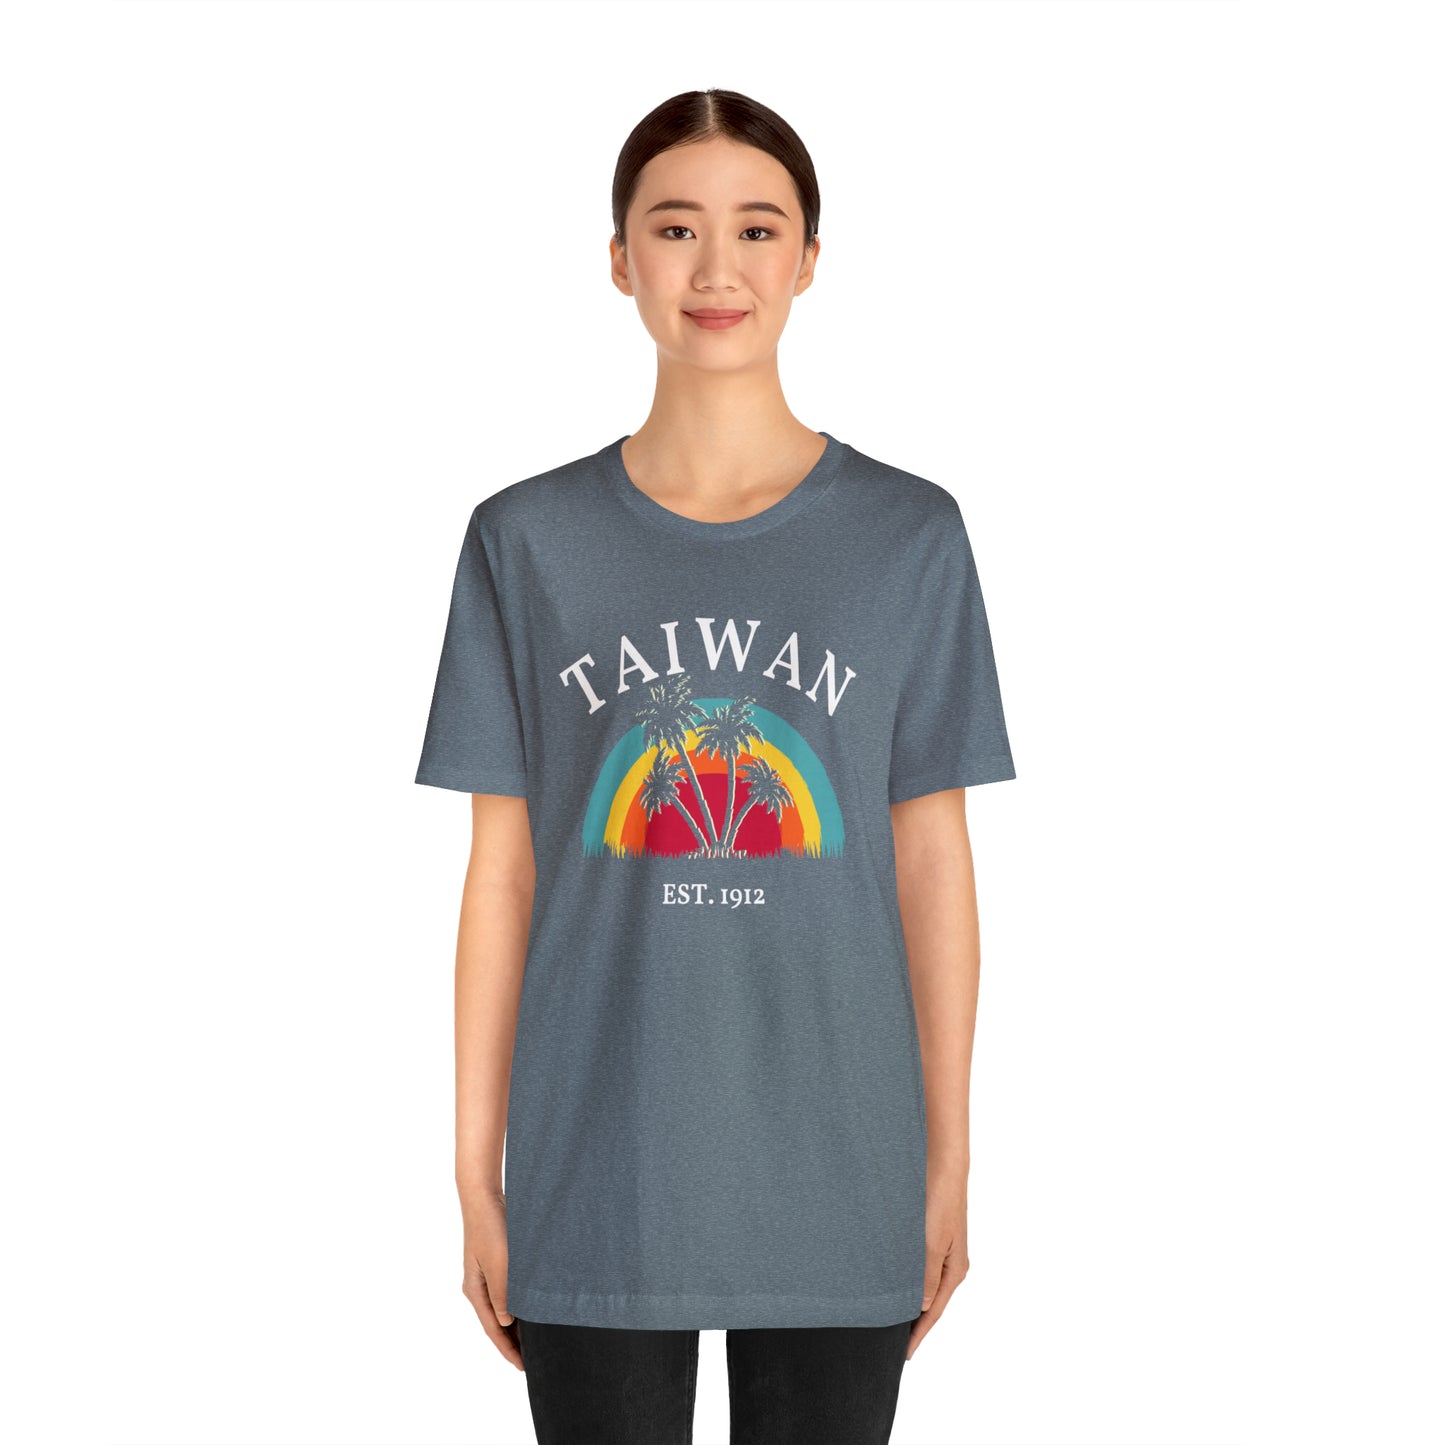 Taiwan Shirt, Unisex Jersey Cotton Short Sleeve Plus Size Tee